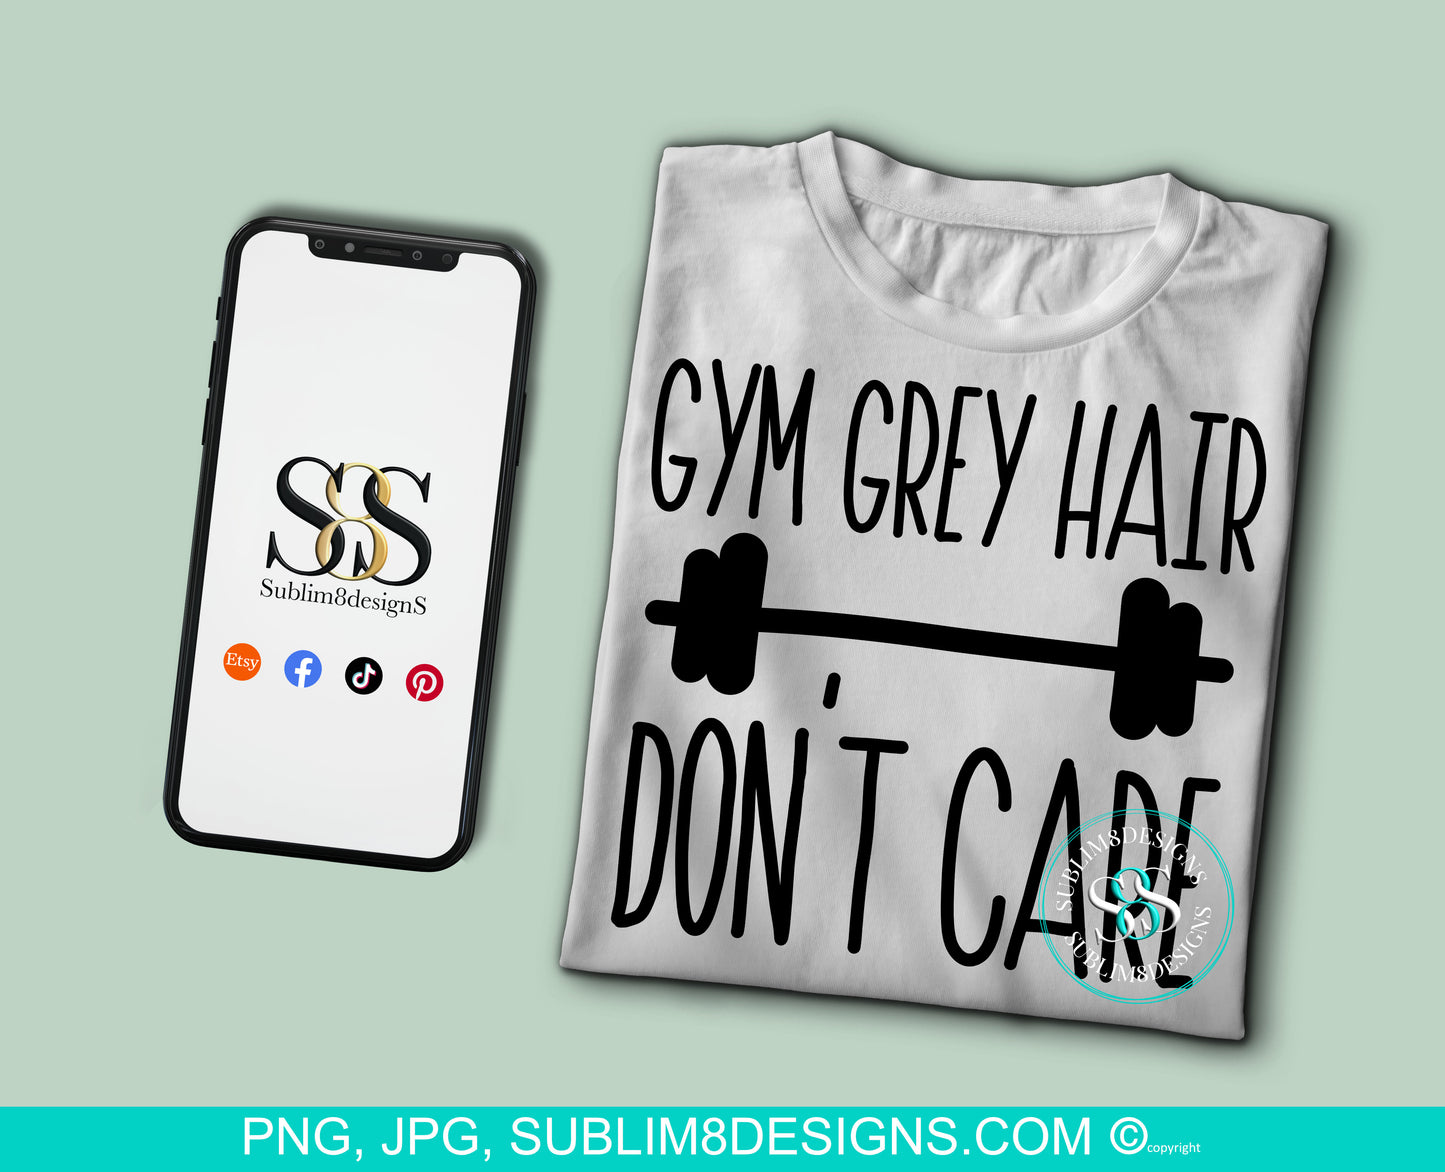 Gym Grey Hair Don't Care